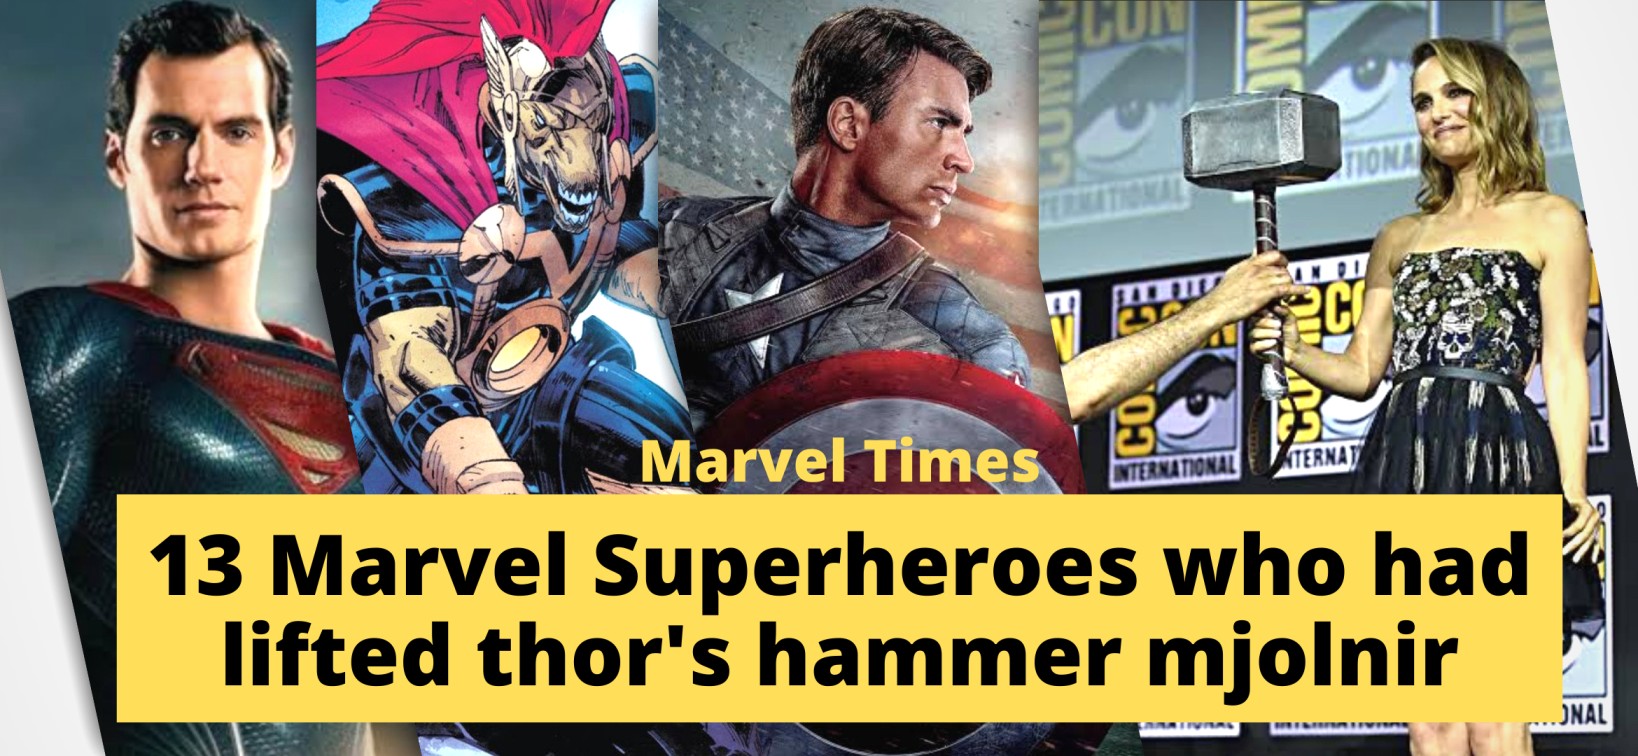 Marvel Superheroes who had lifted thor's hammer mjolnir, marvel times